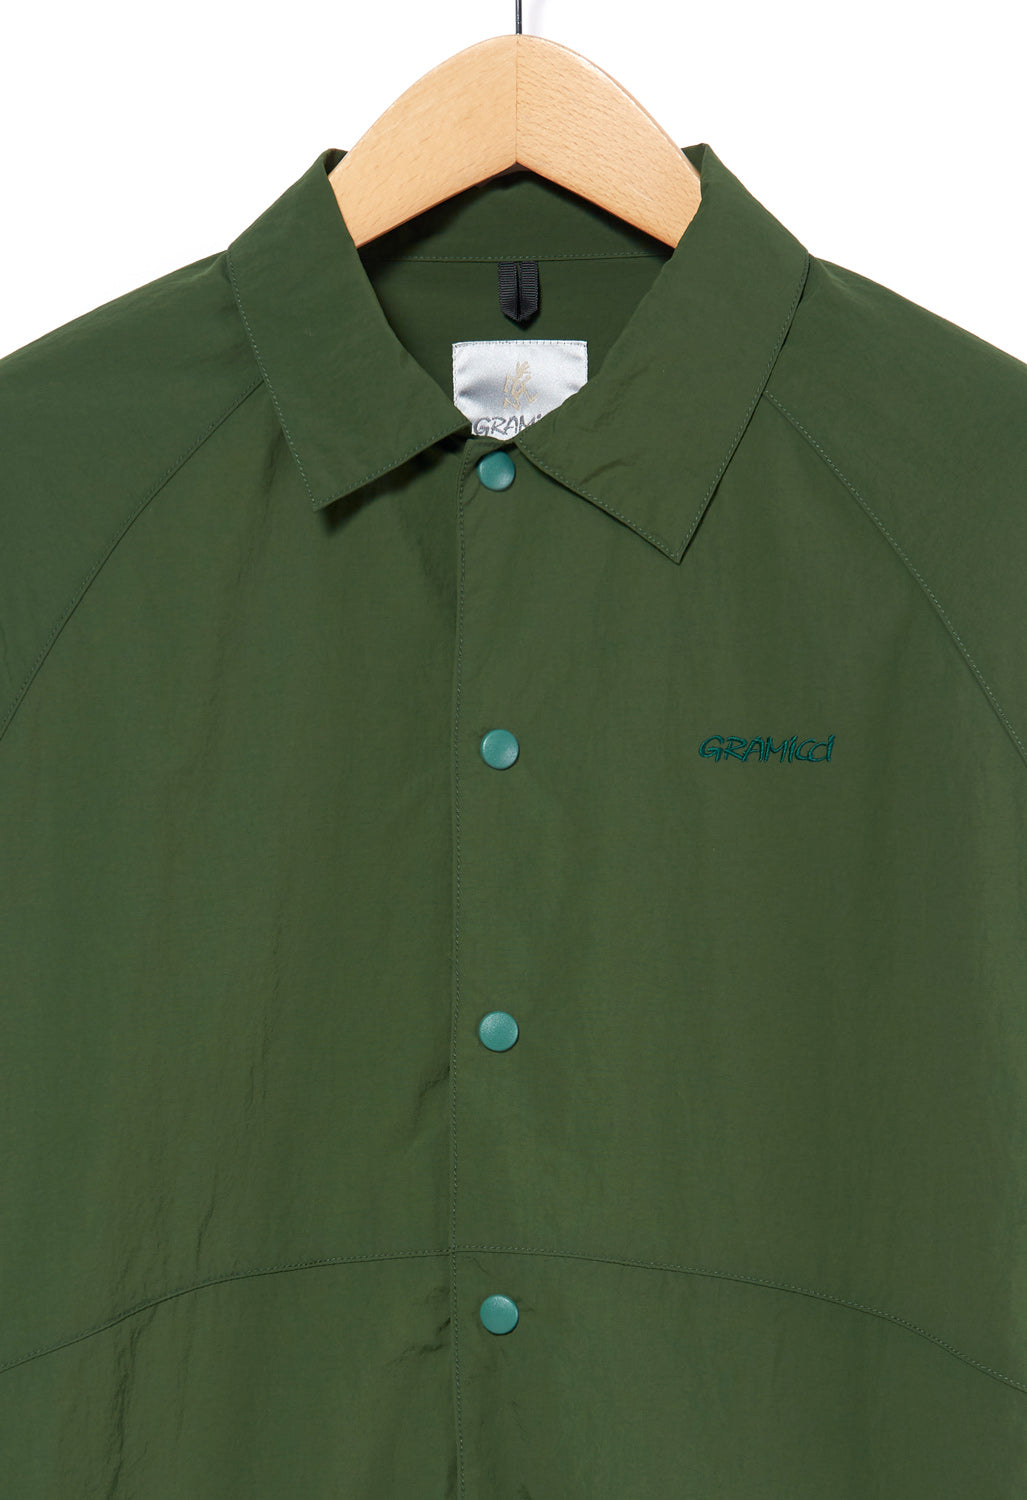 Gramicci Men's River Bank Shirt - Hunter Green